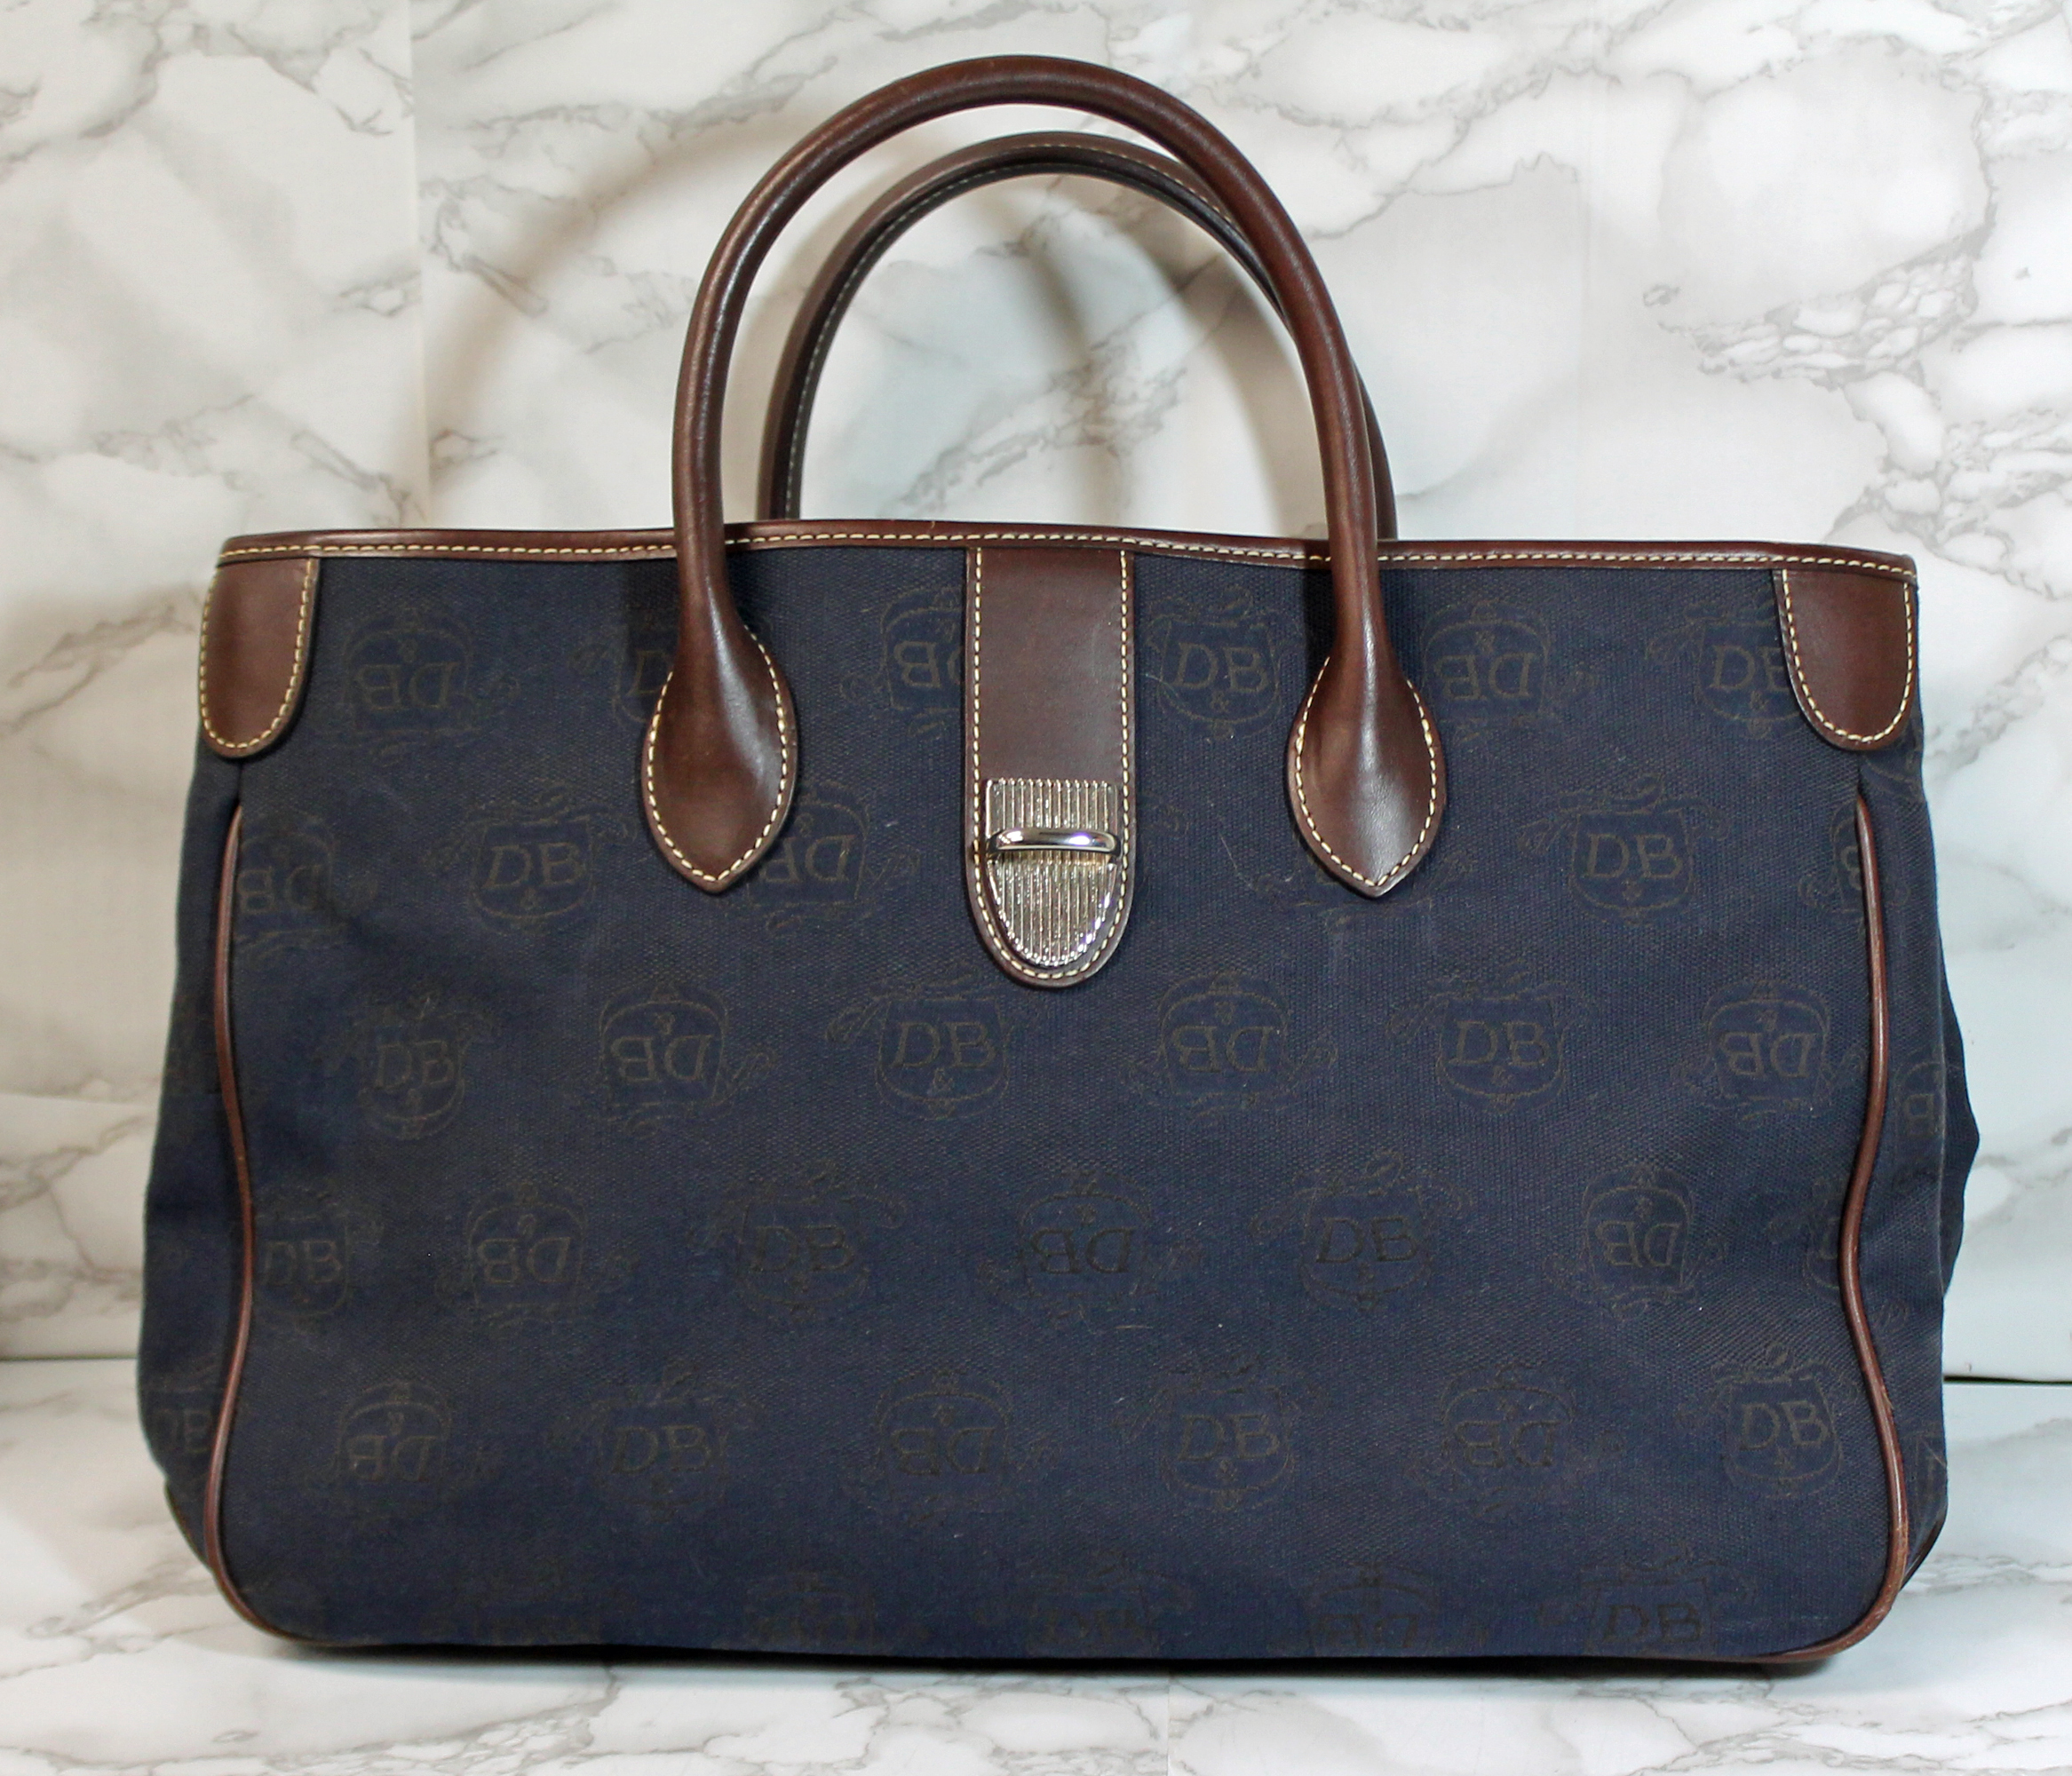 Dooney & Bourke Navy Canvas Leather Tote Handbag (AP 457 ) | eBay